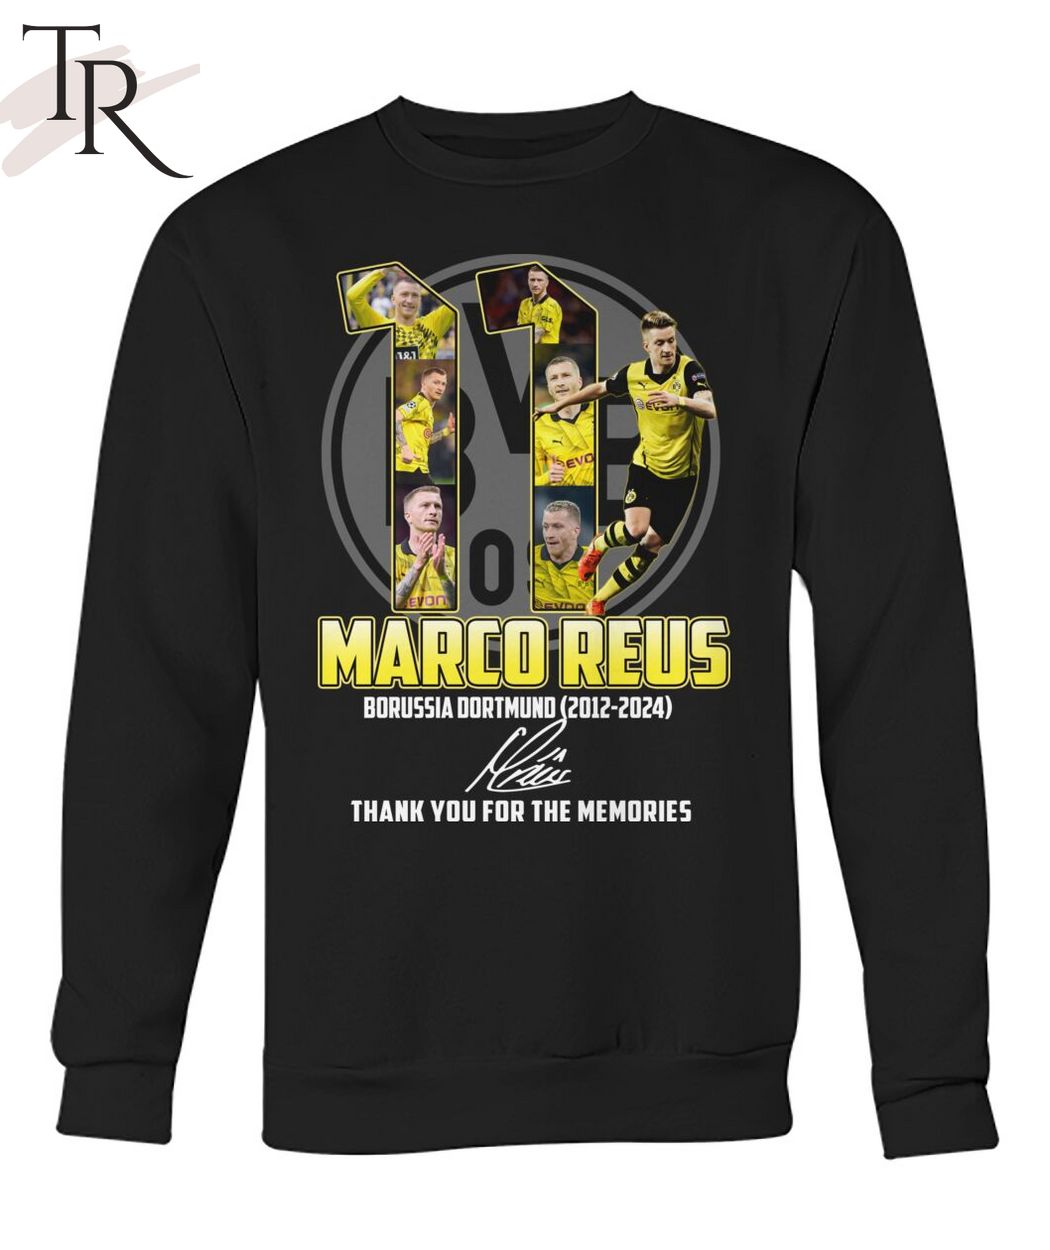 Marco Reus Borussia Dortmund 2012-2024 Thank You For The Memories T-Shirt